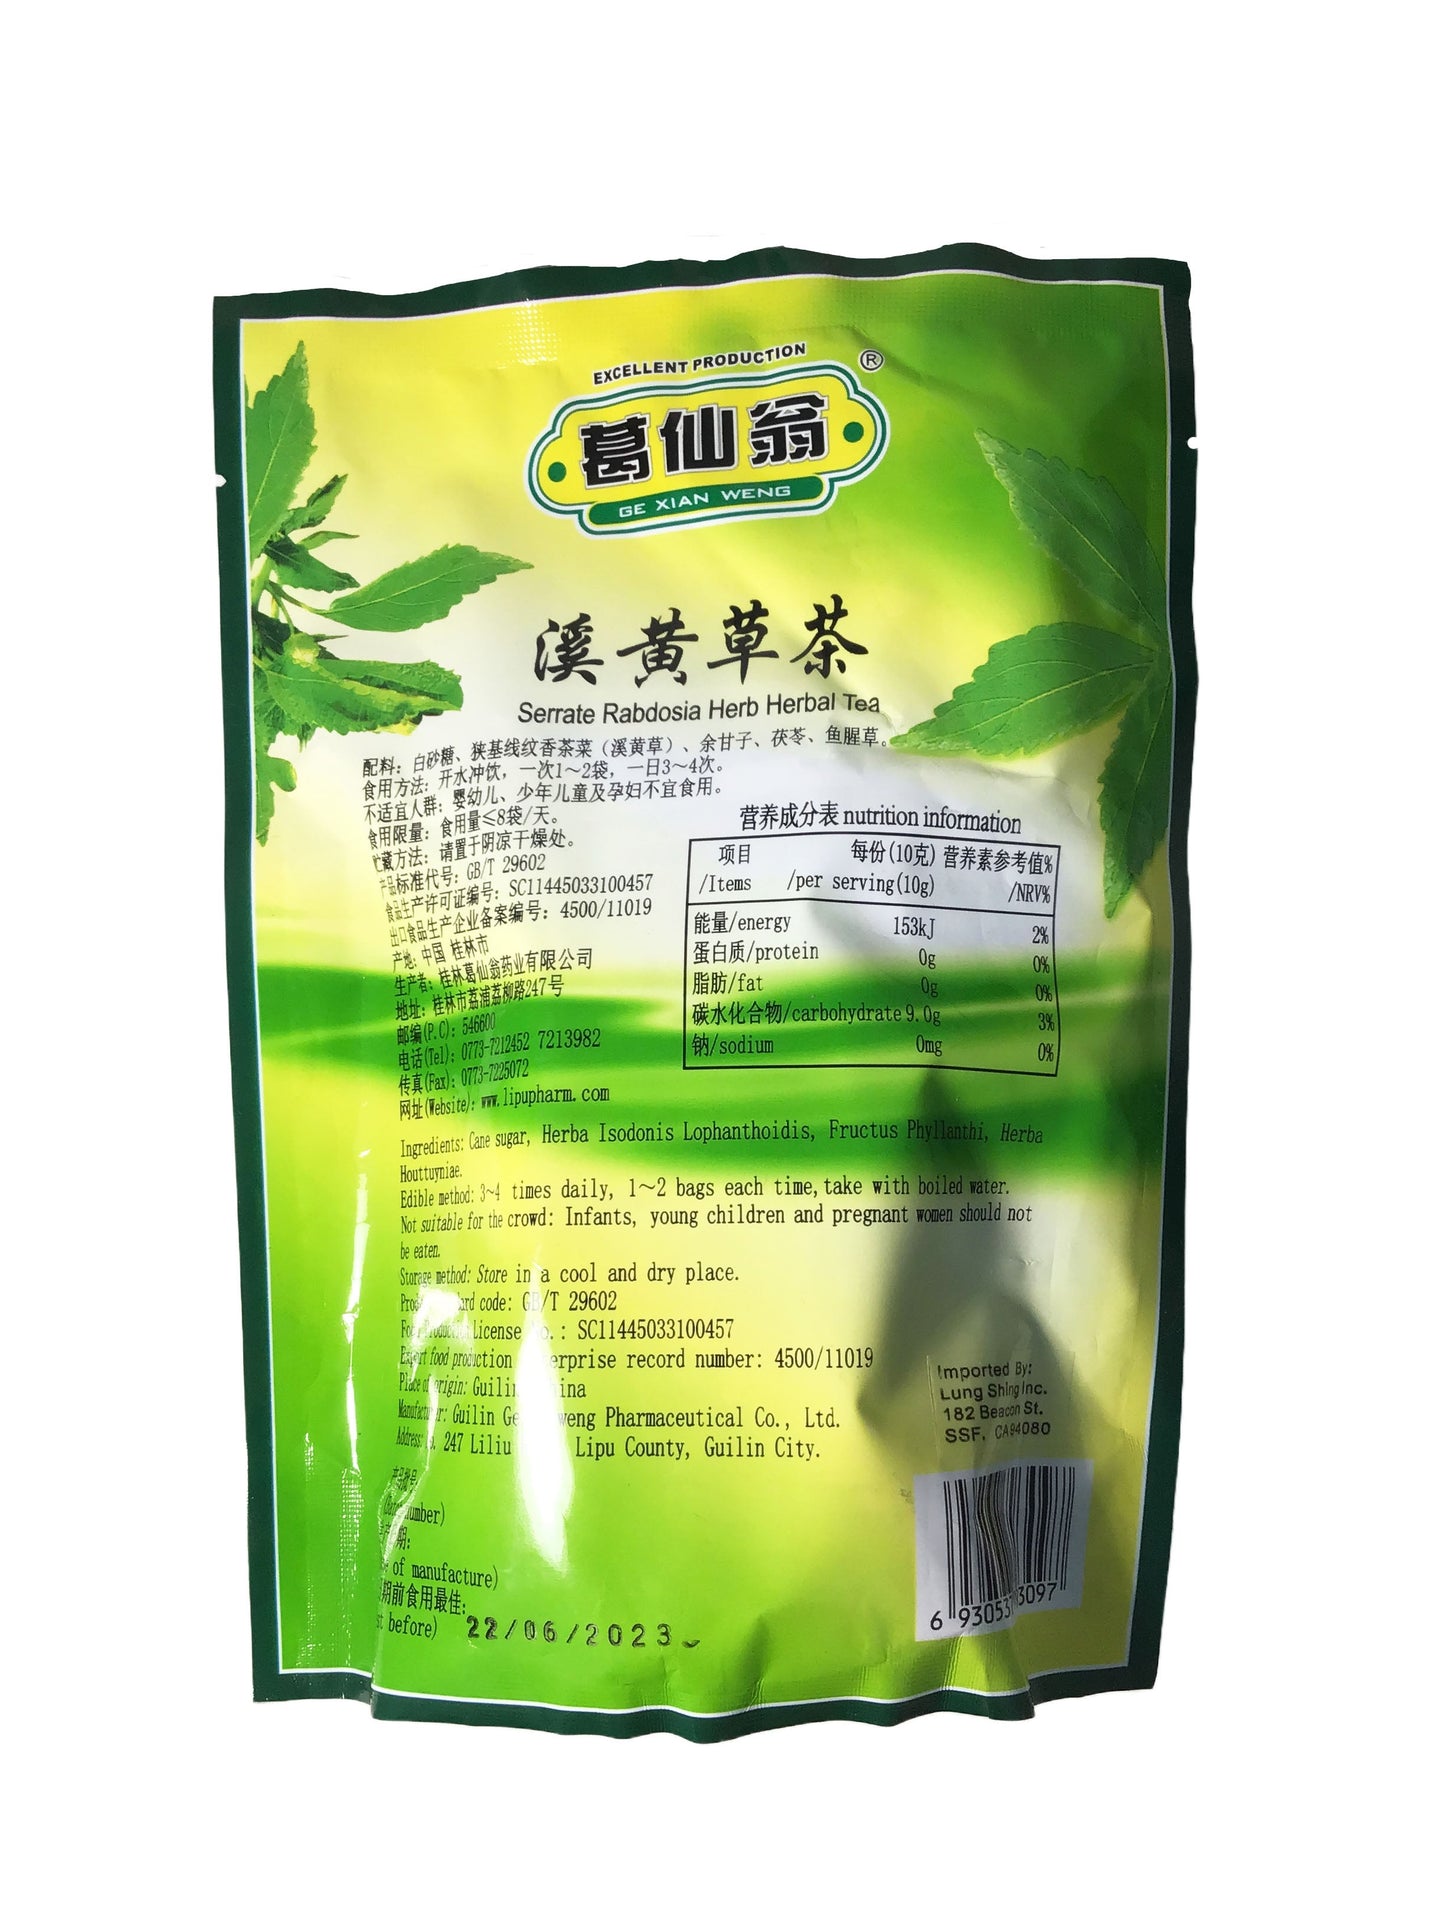 Serrate Rabdosia Herb Herbal Tea (10 grams x 16 bags) 葛仙翁 溪黄草茶 (10克 x 16包)